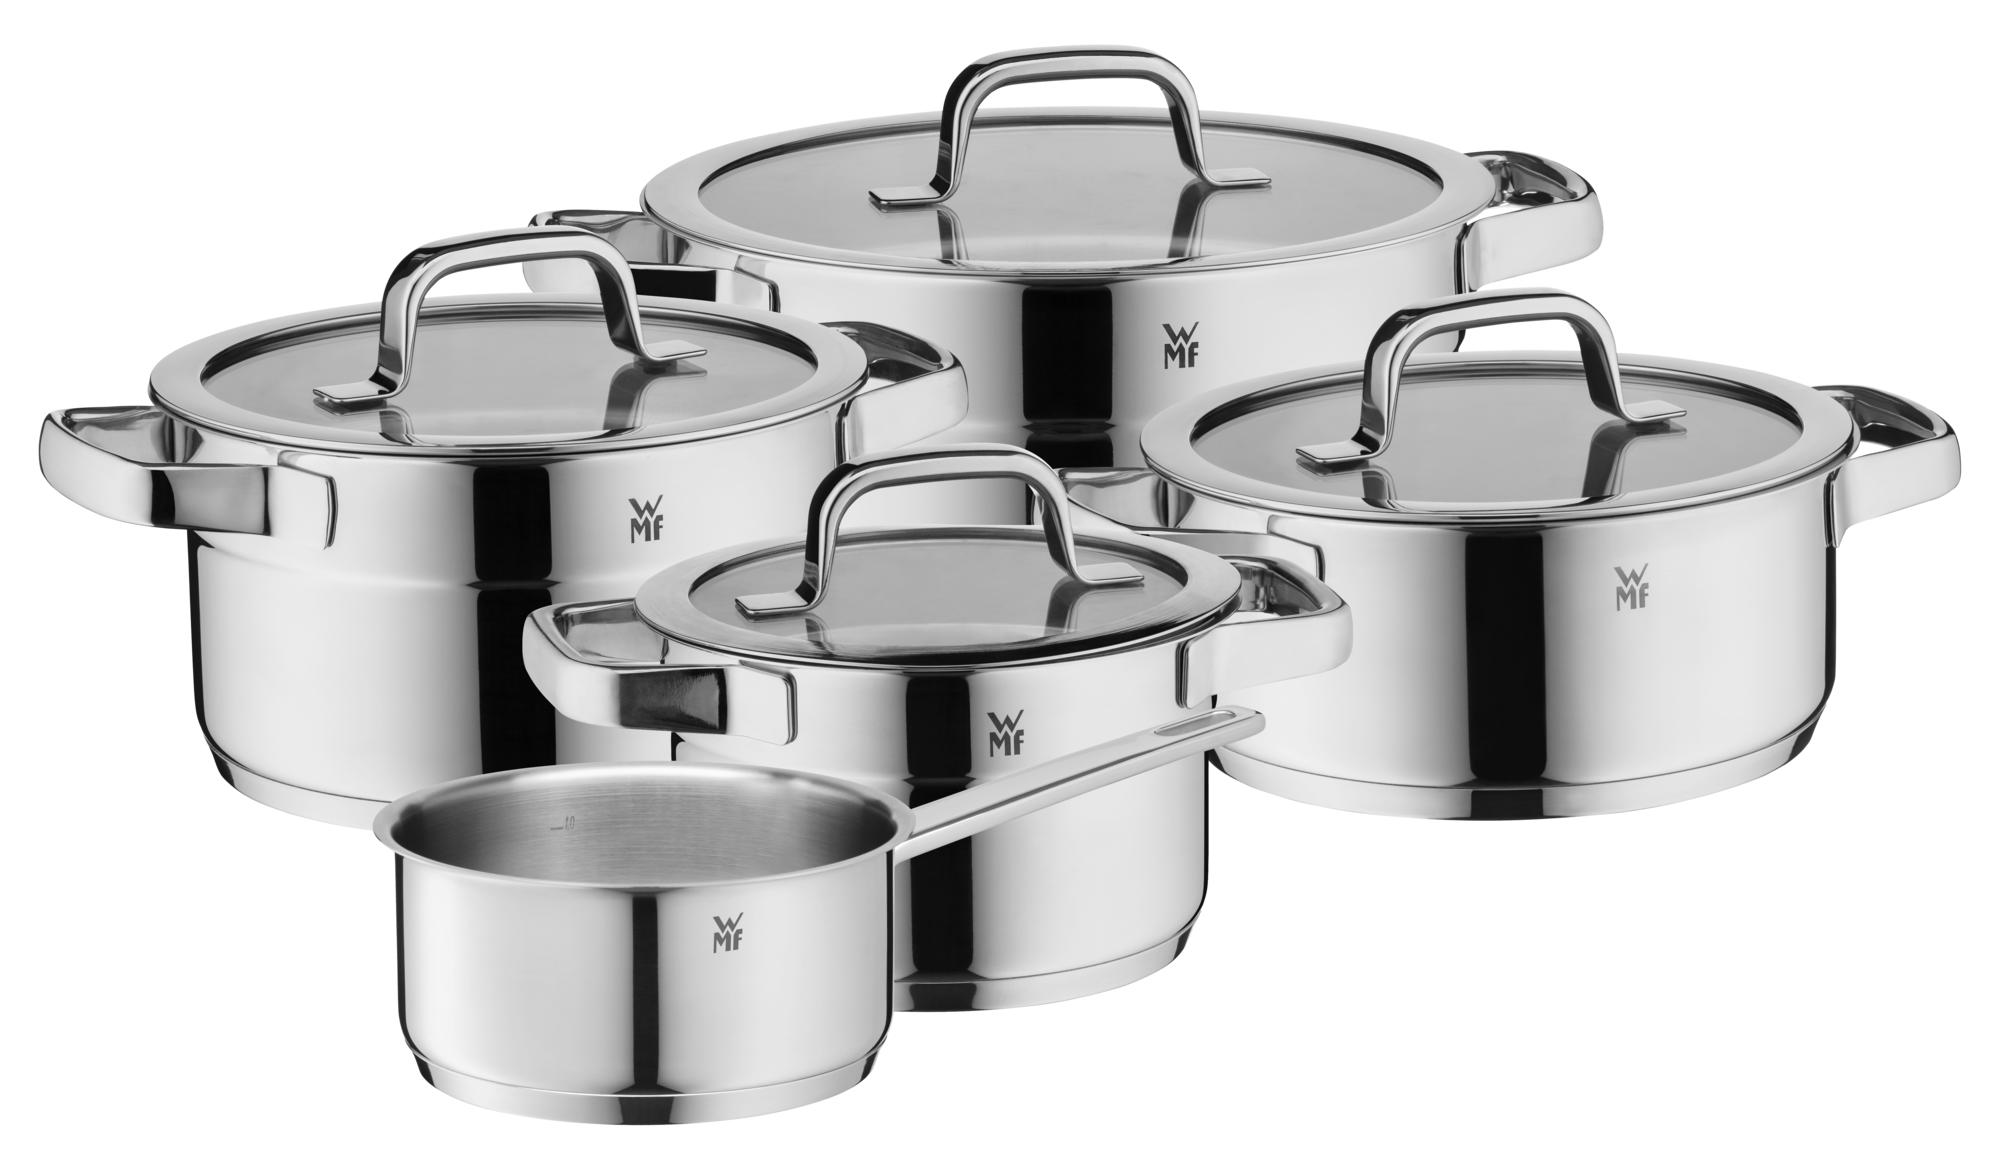 Compact Cuisine Cookware 5-Piece Pot Set